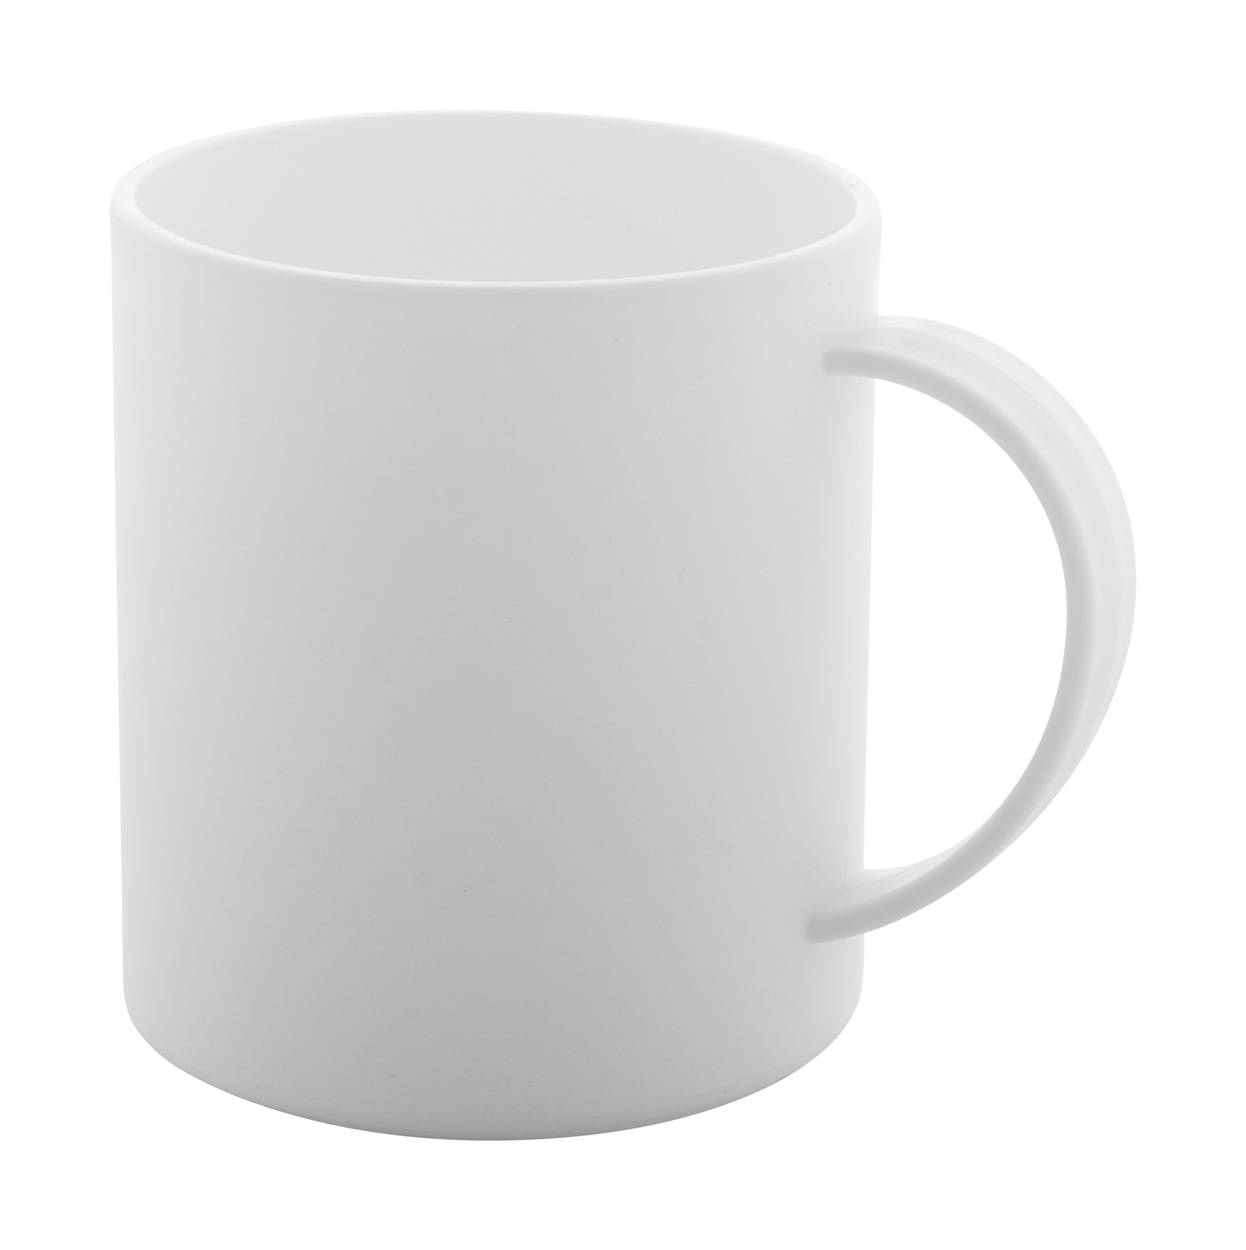 Plantex antibacterial mug - white